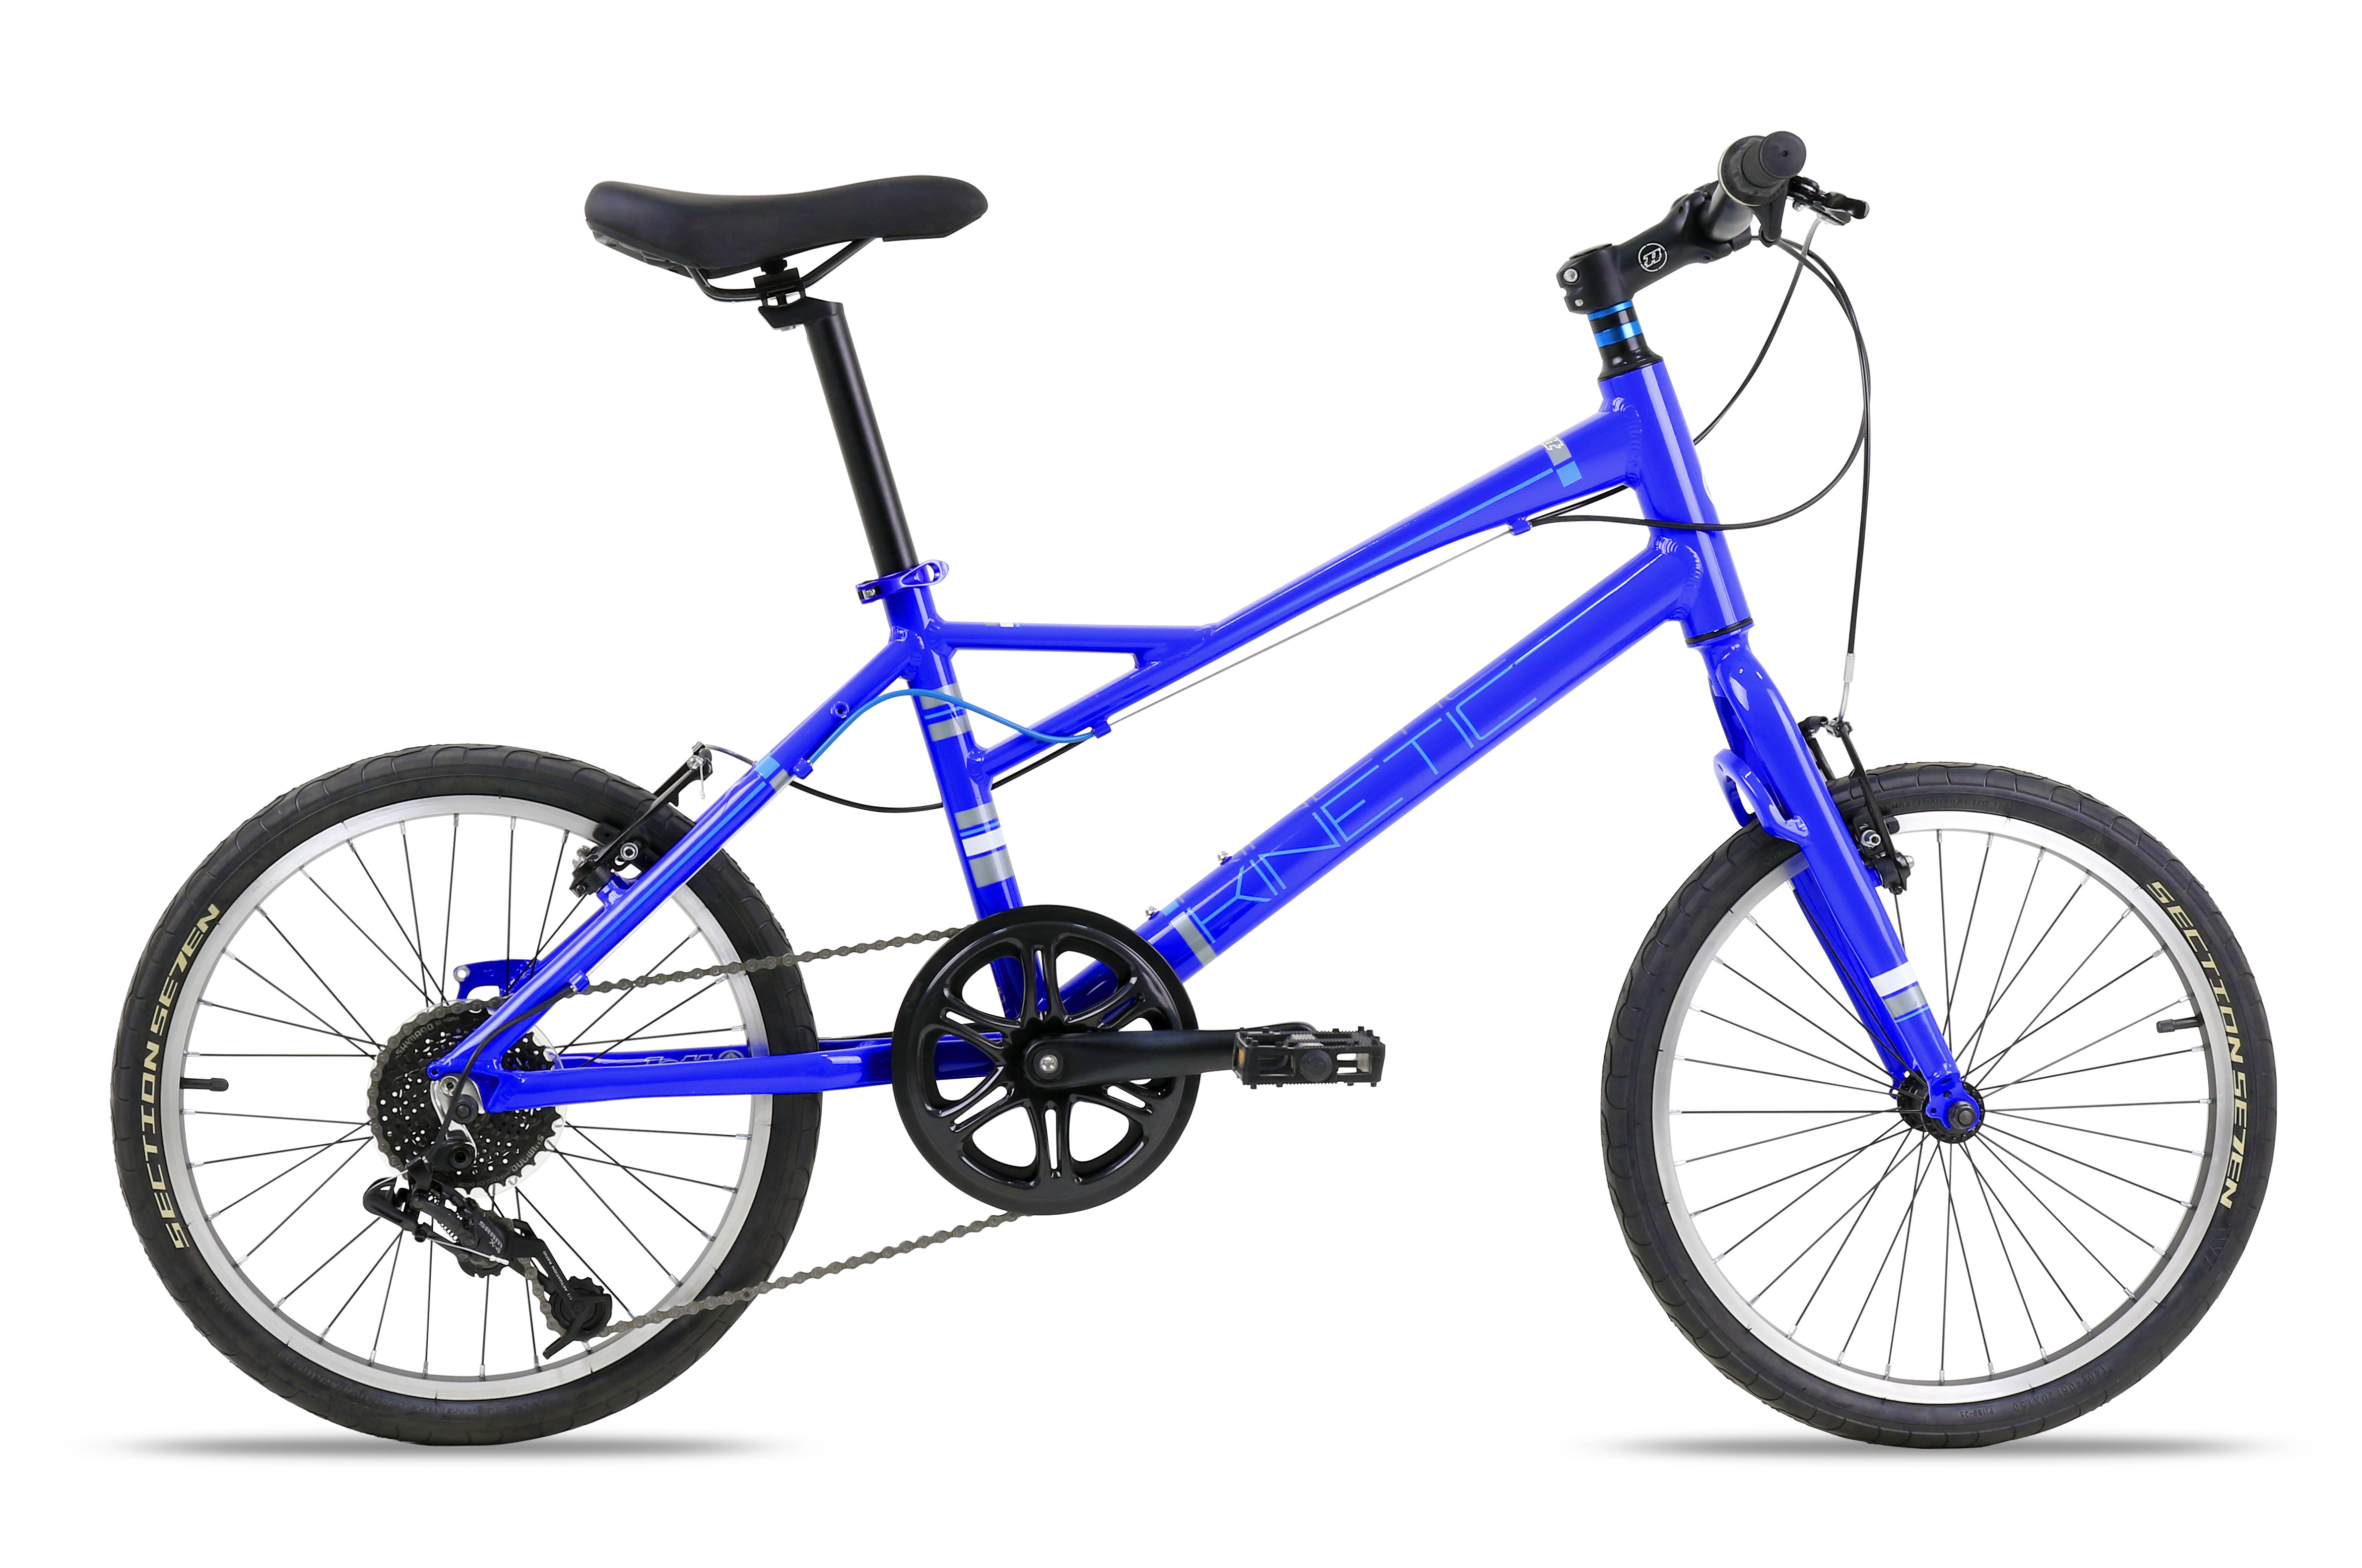 Toan Thang Cycles - Shopxedap - Xe đạp thể thao Jett Kinetic 2016